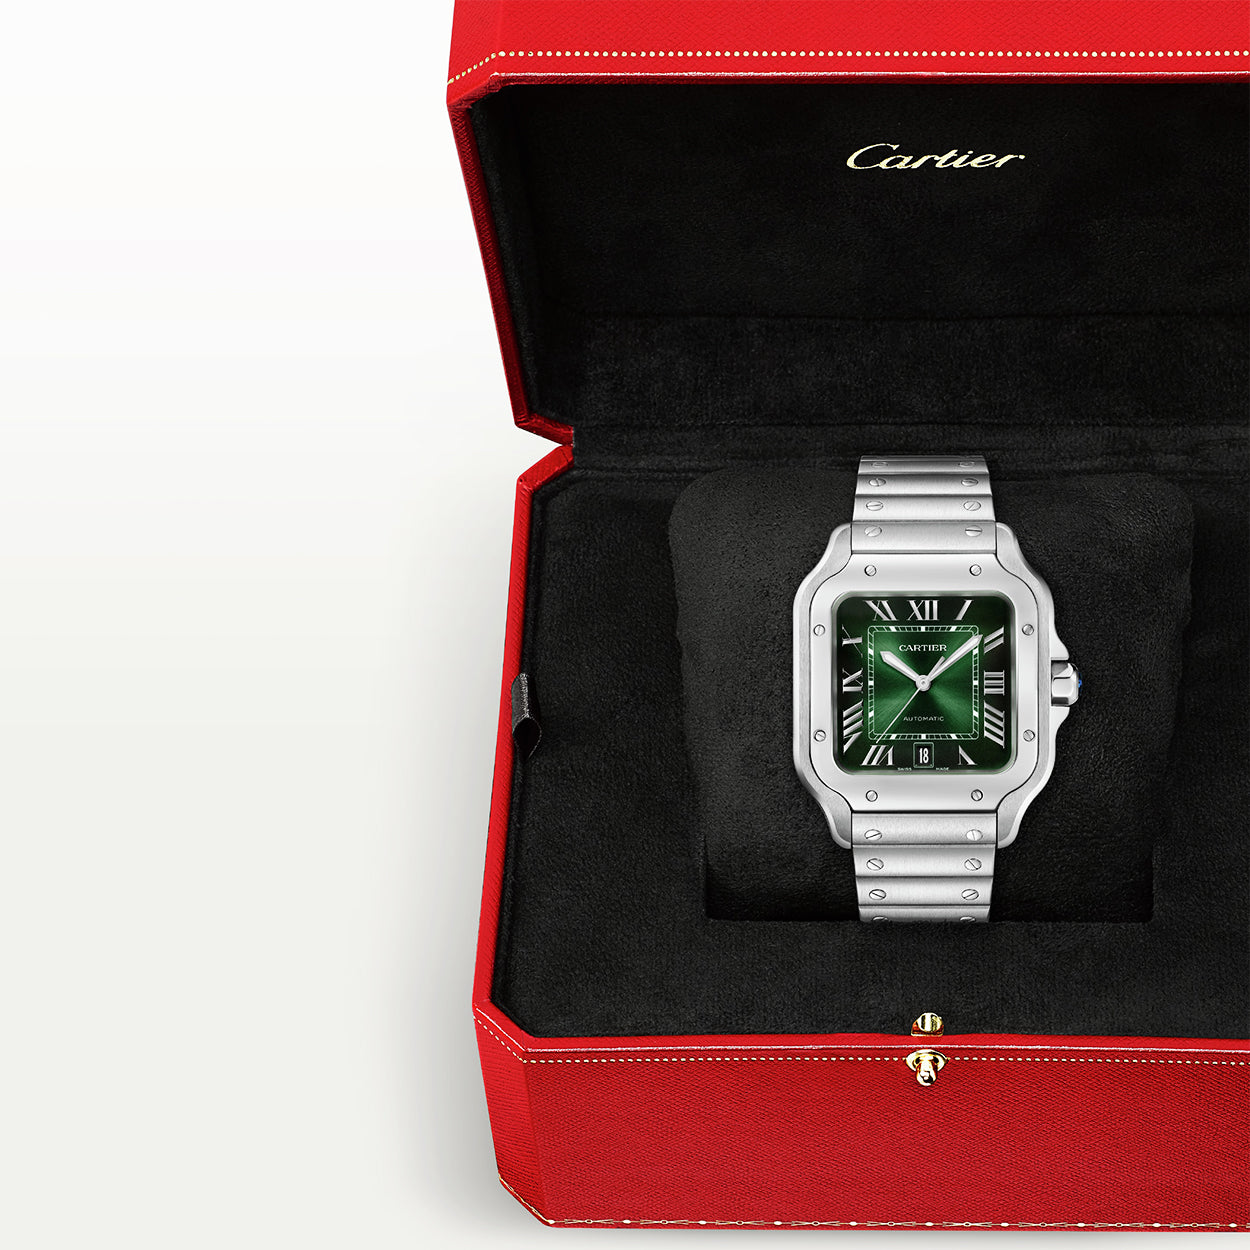 Santos de Cartier Large Smoky Green Dial Automatic Bracelet/Strap Watch